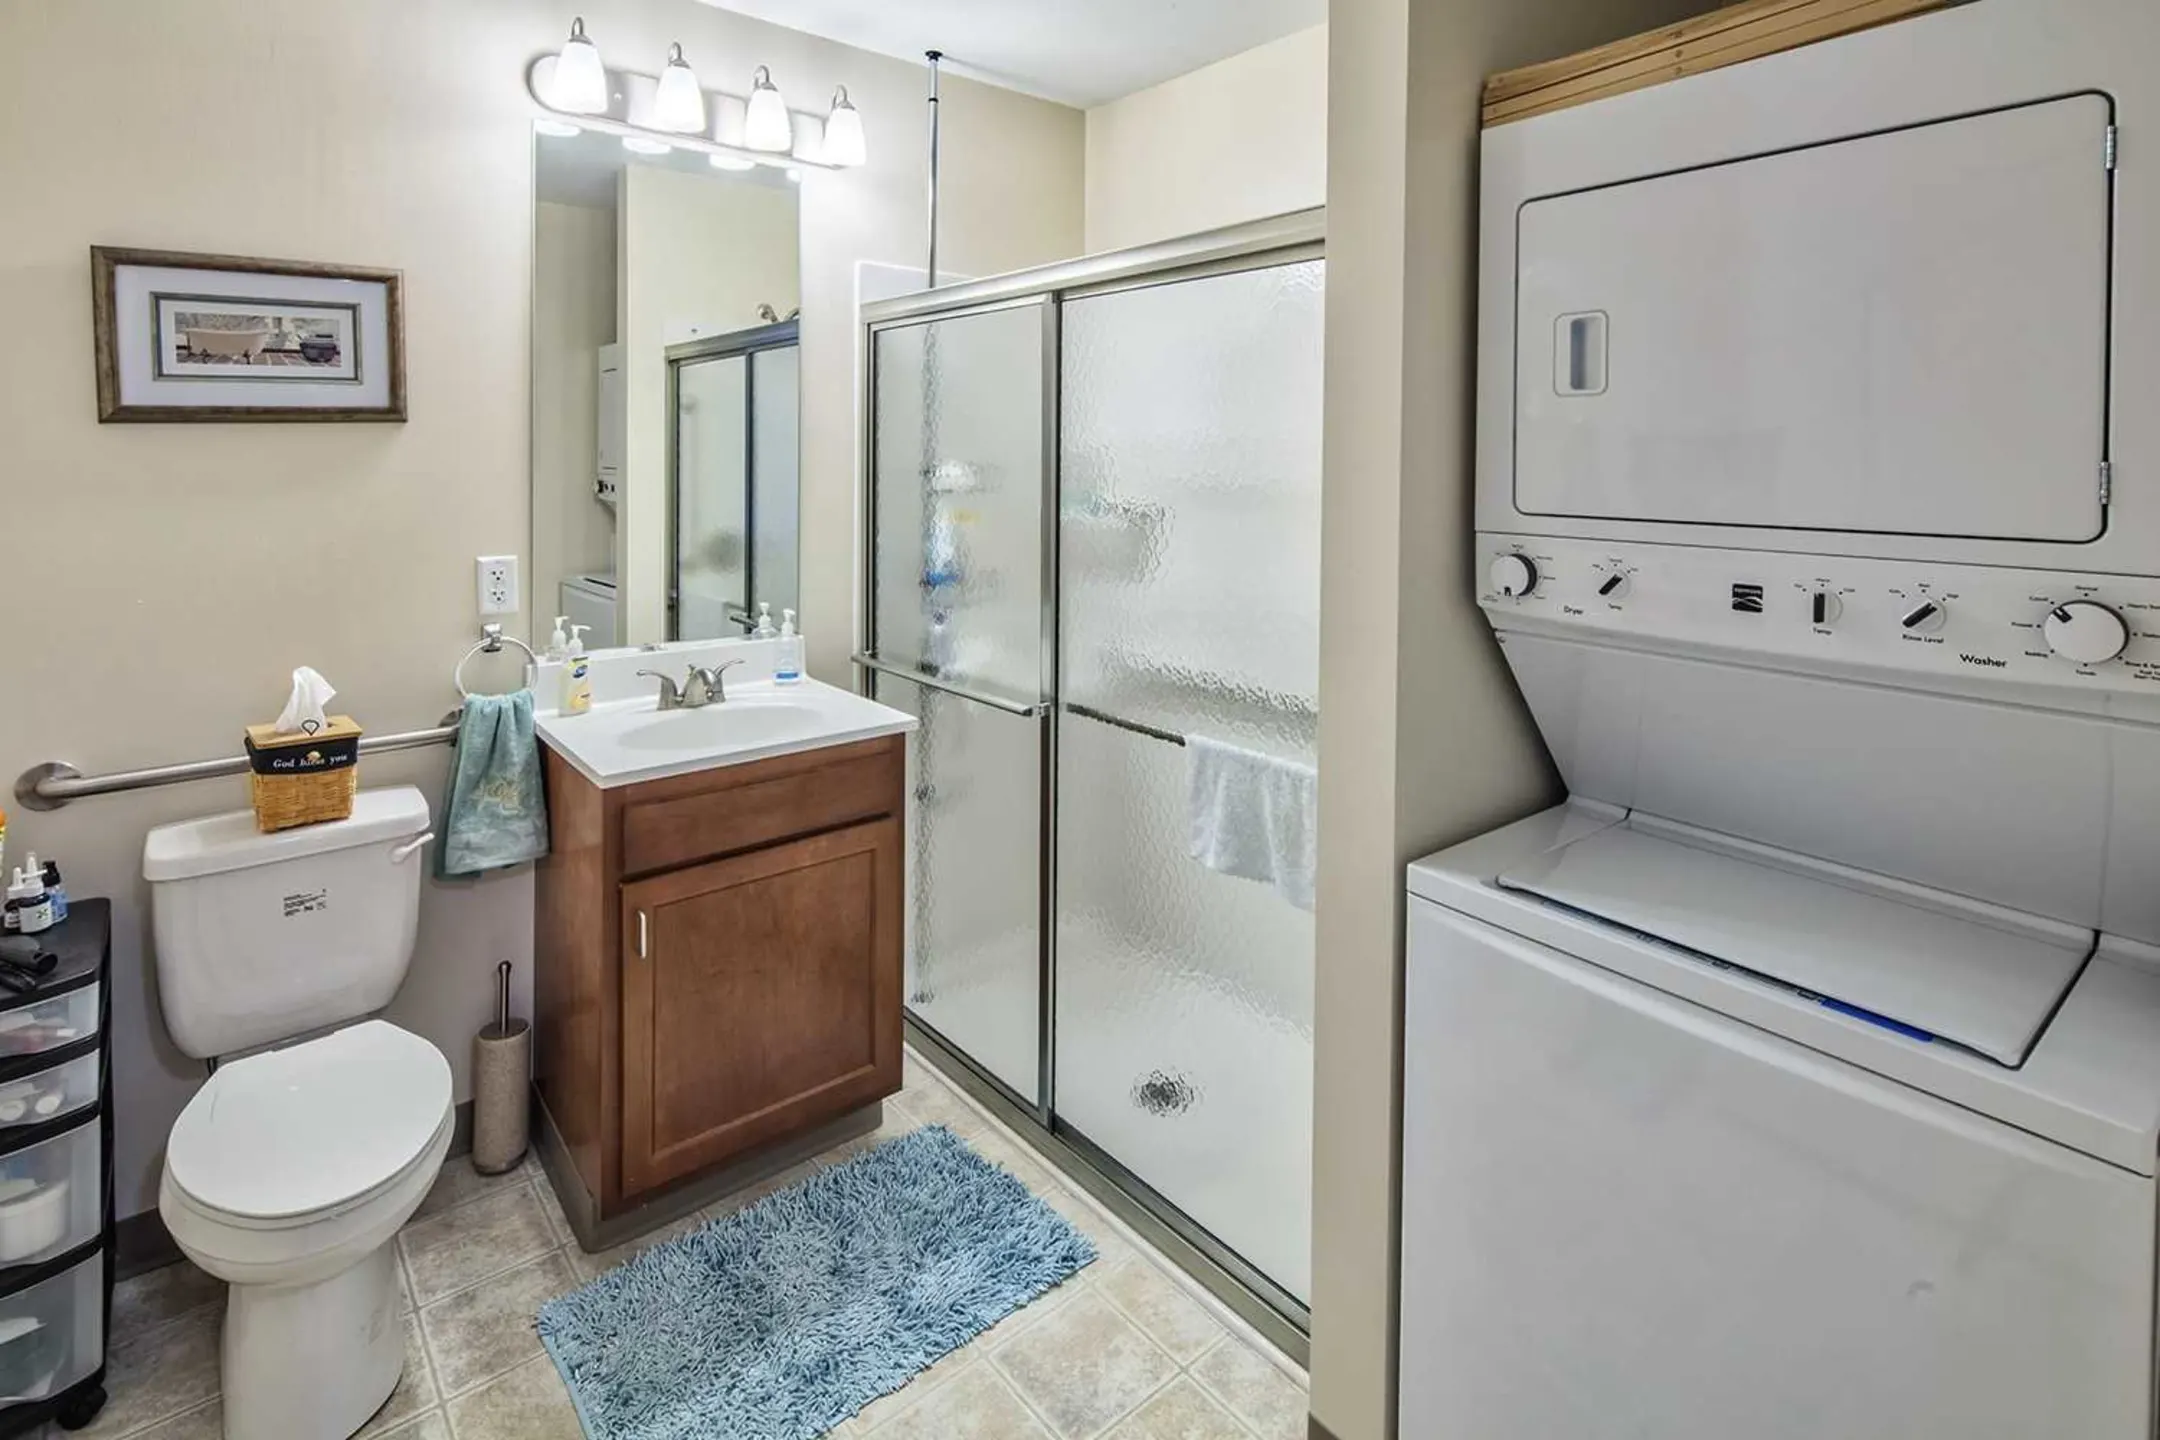 Bathroom - Camillus Pointe Senior Apartments - Camillus, NY